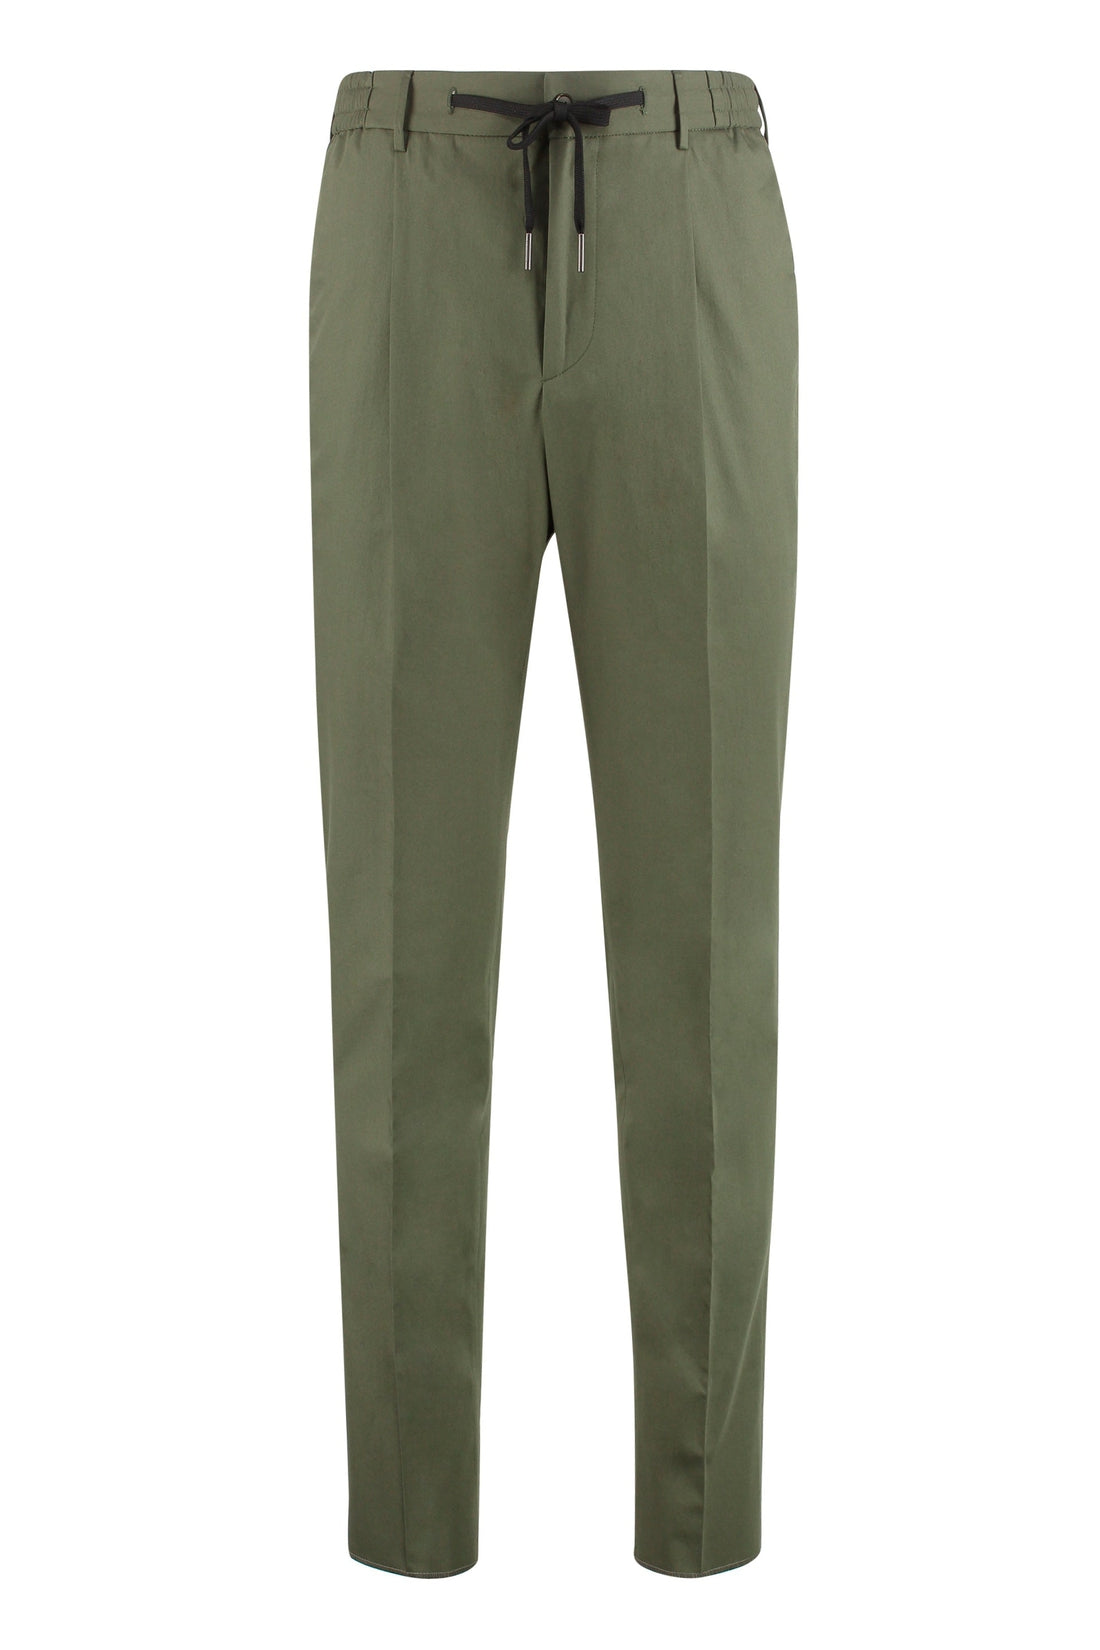 Tagliatore-OUTLET-SALE-Stretch cotton chino trousers-ARCHIVIST